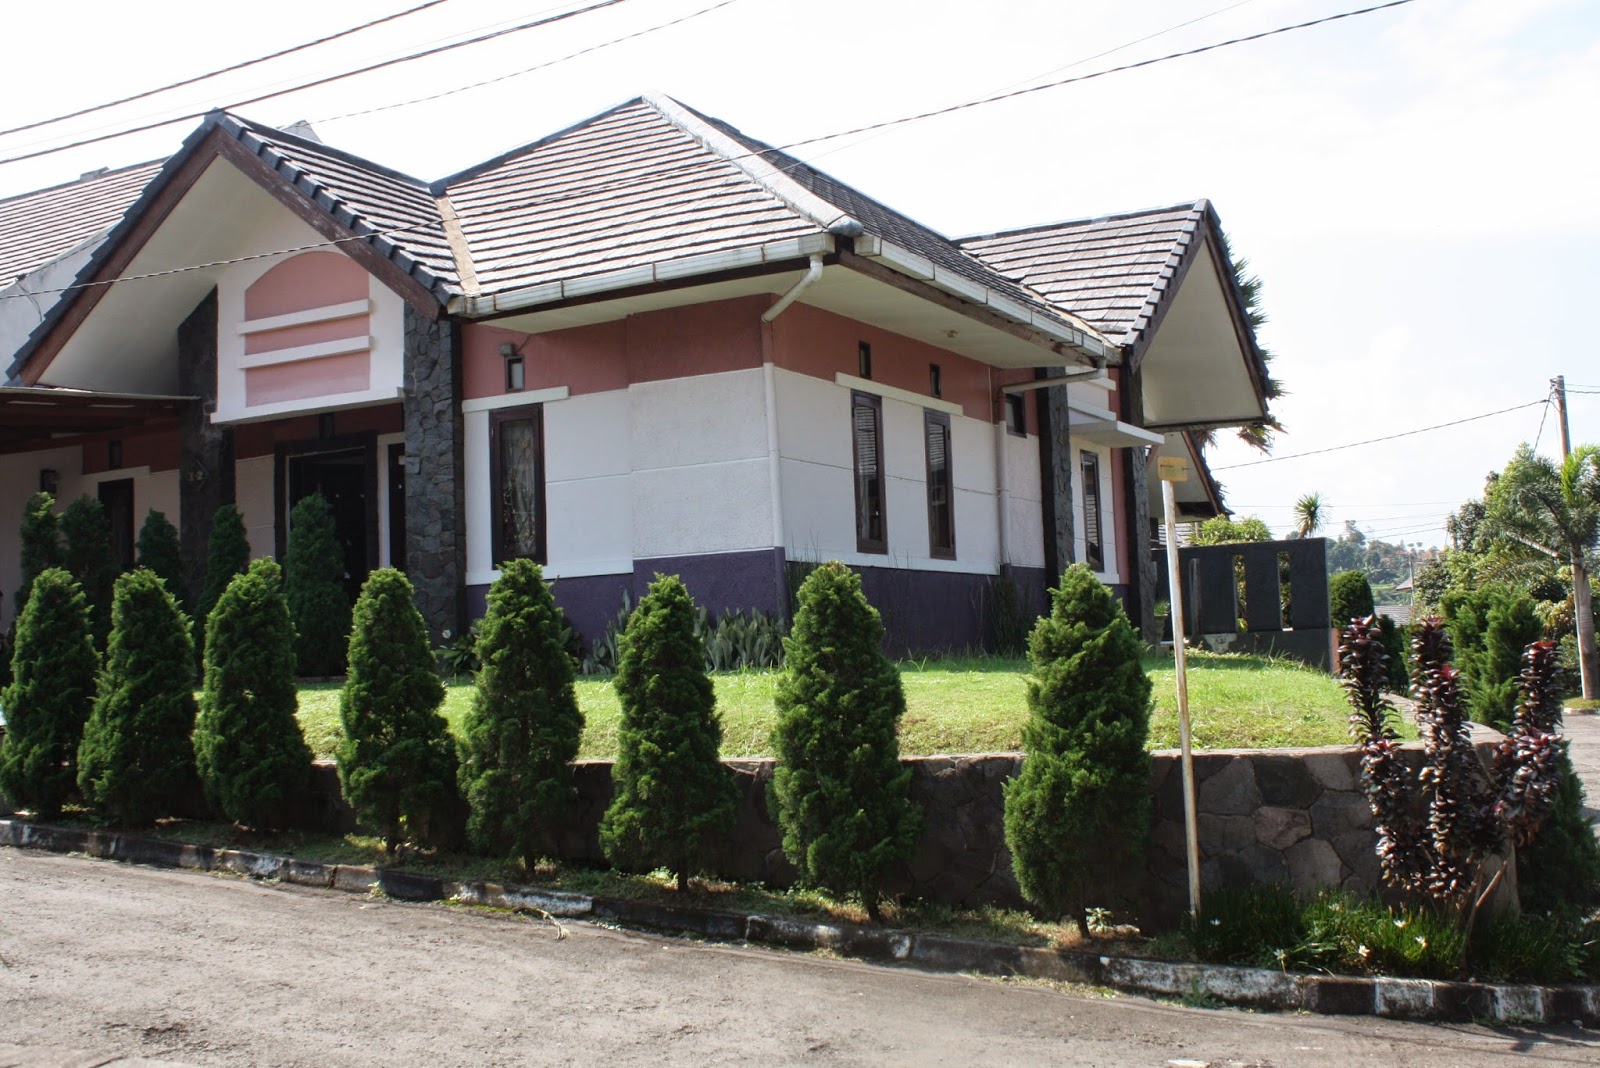  Rumah  Lelang Dijual Di  Bandung  Rumah  XY